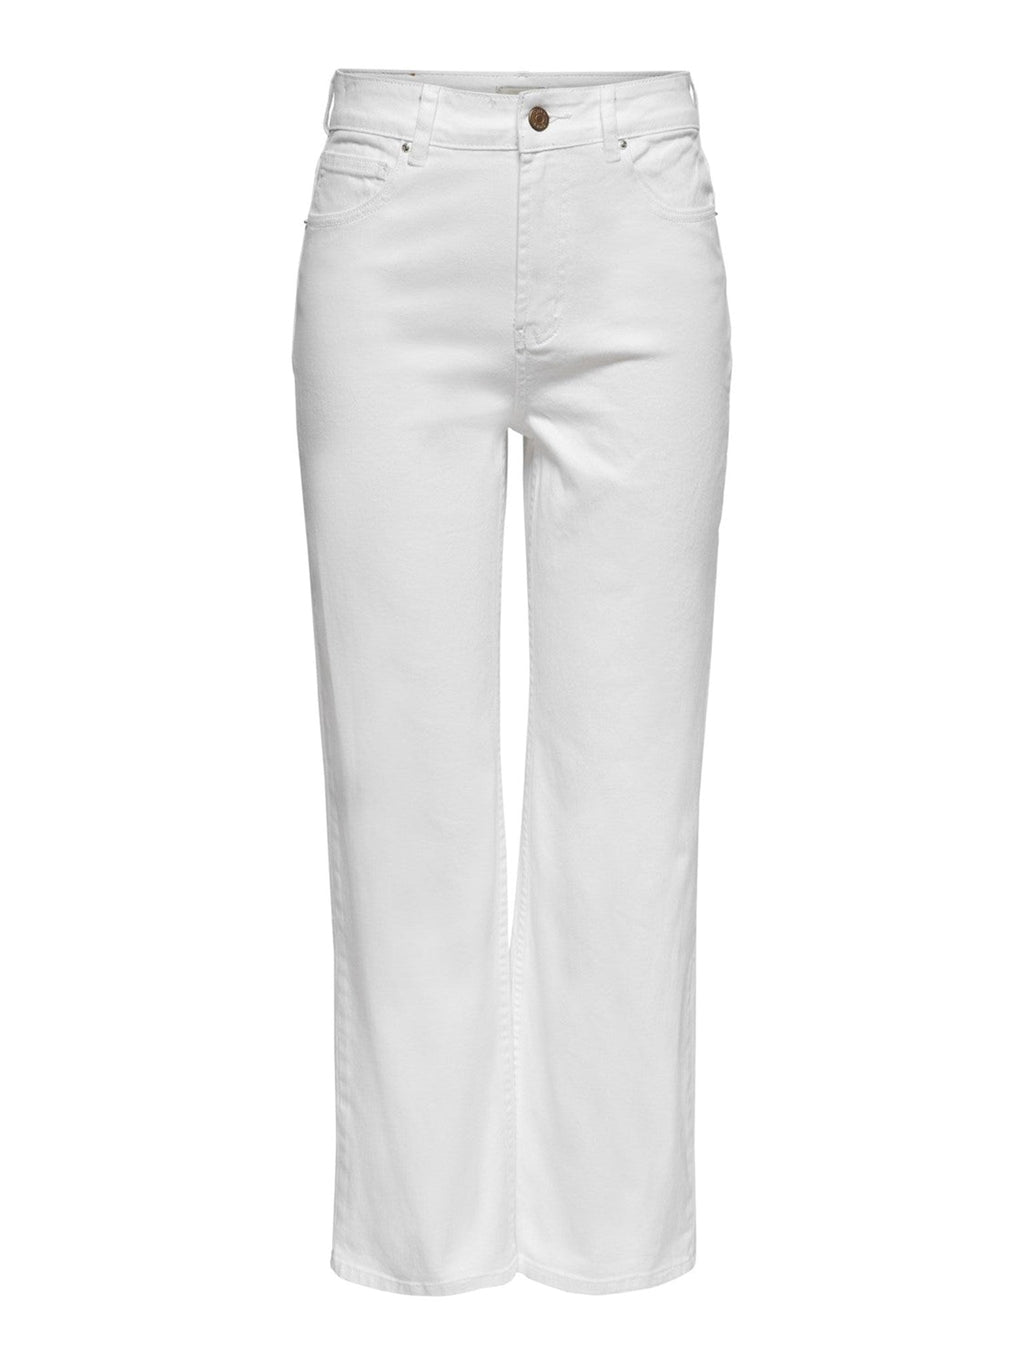 Brede jeans met hoge taille - wit